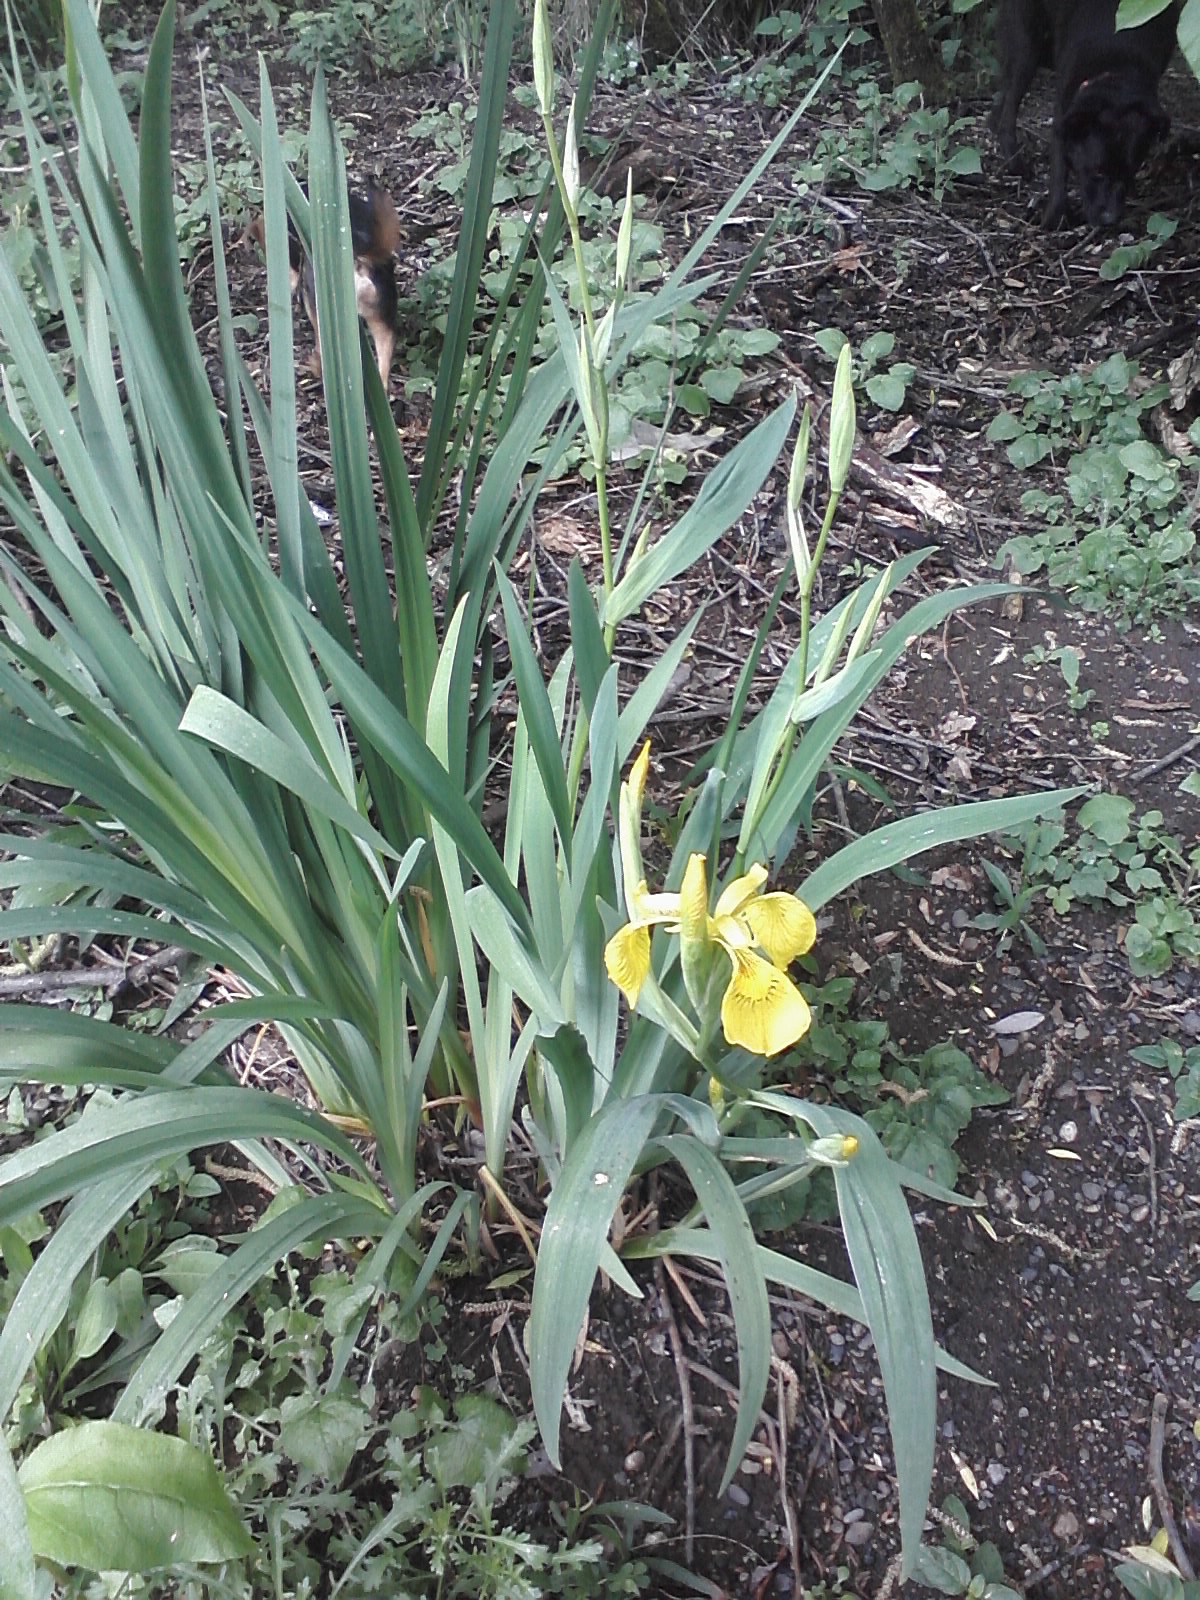 Yellow Flag Iris by Sellwood Bridge